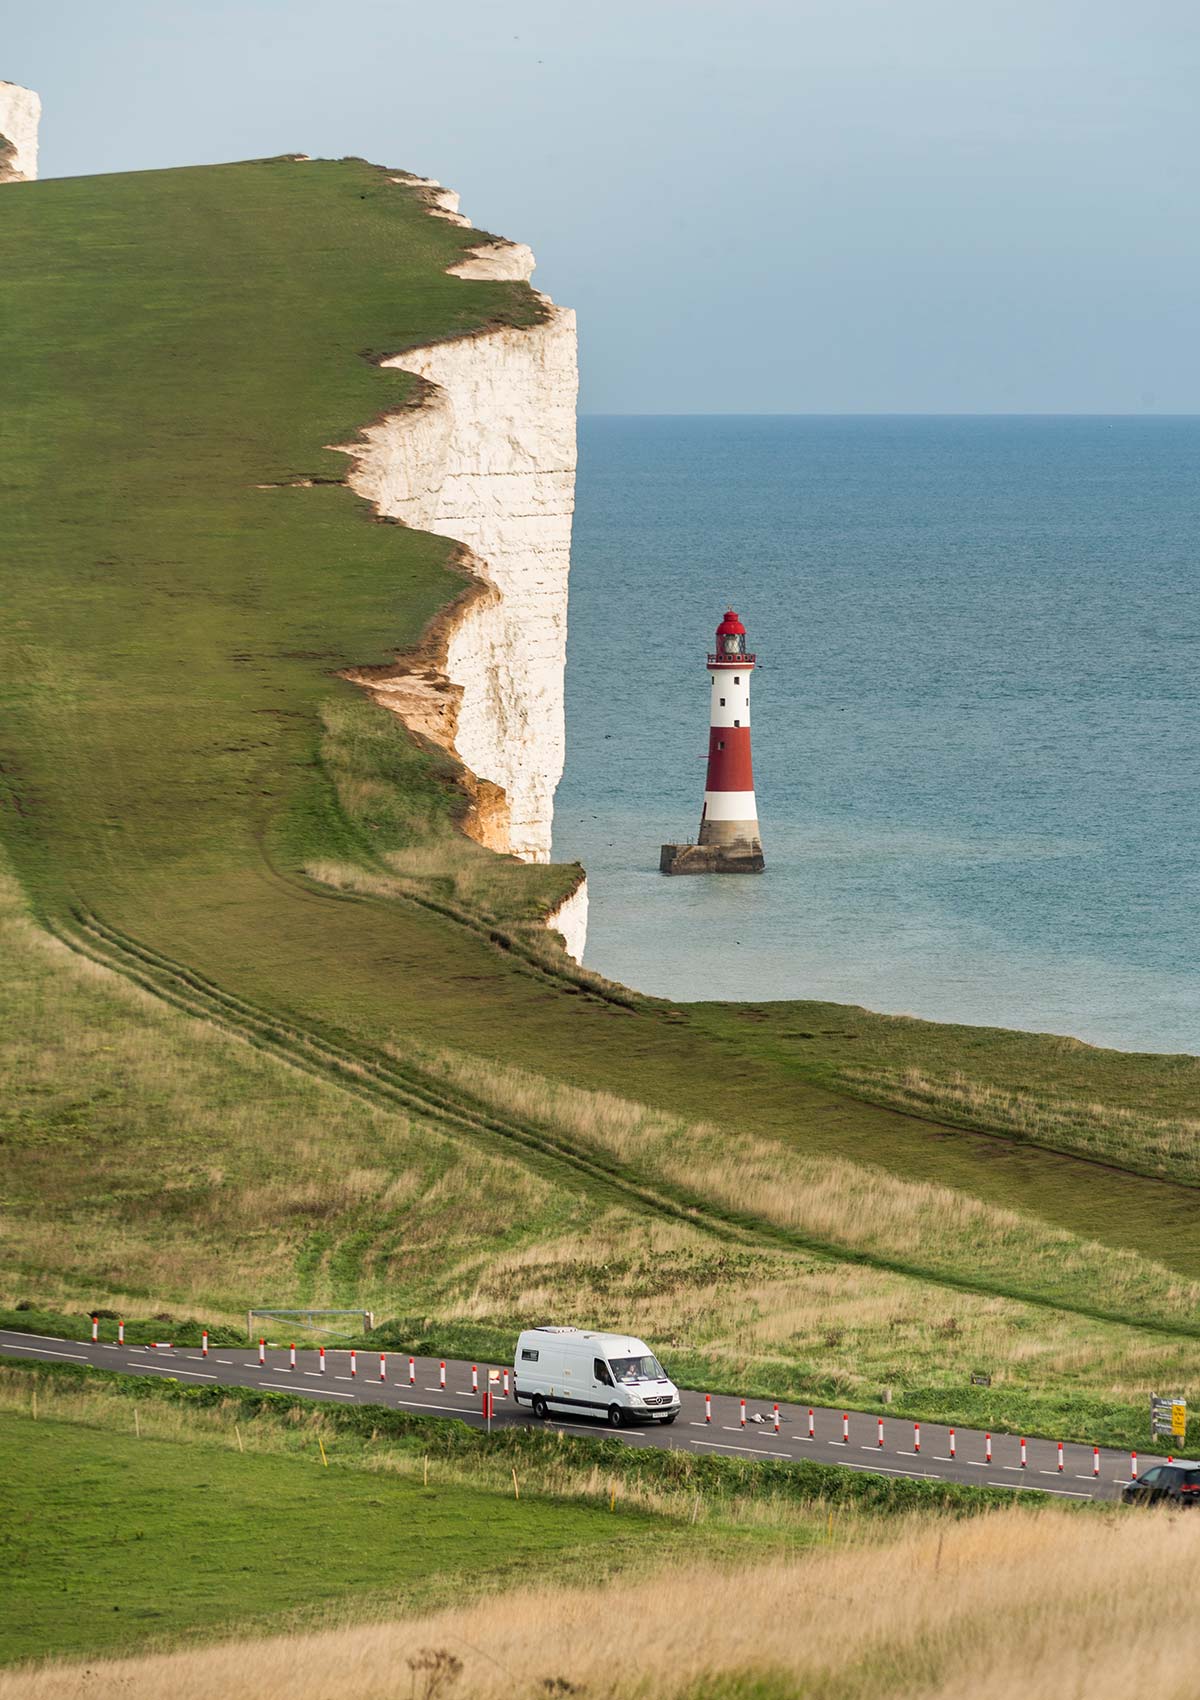 Route, Phare de Beachy Head, Falaises des Seven Sisters, East Sussex, Angleterre, Royaume-Uni / Road, Beachy Head Lighthouse, Seven Sisters cliffs, East Sussex, England, UK